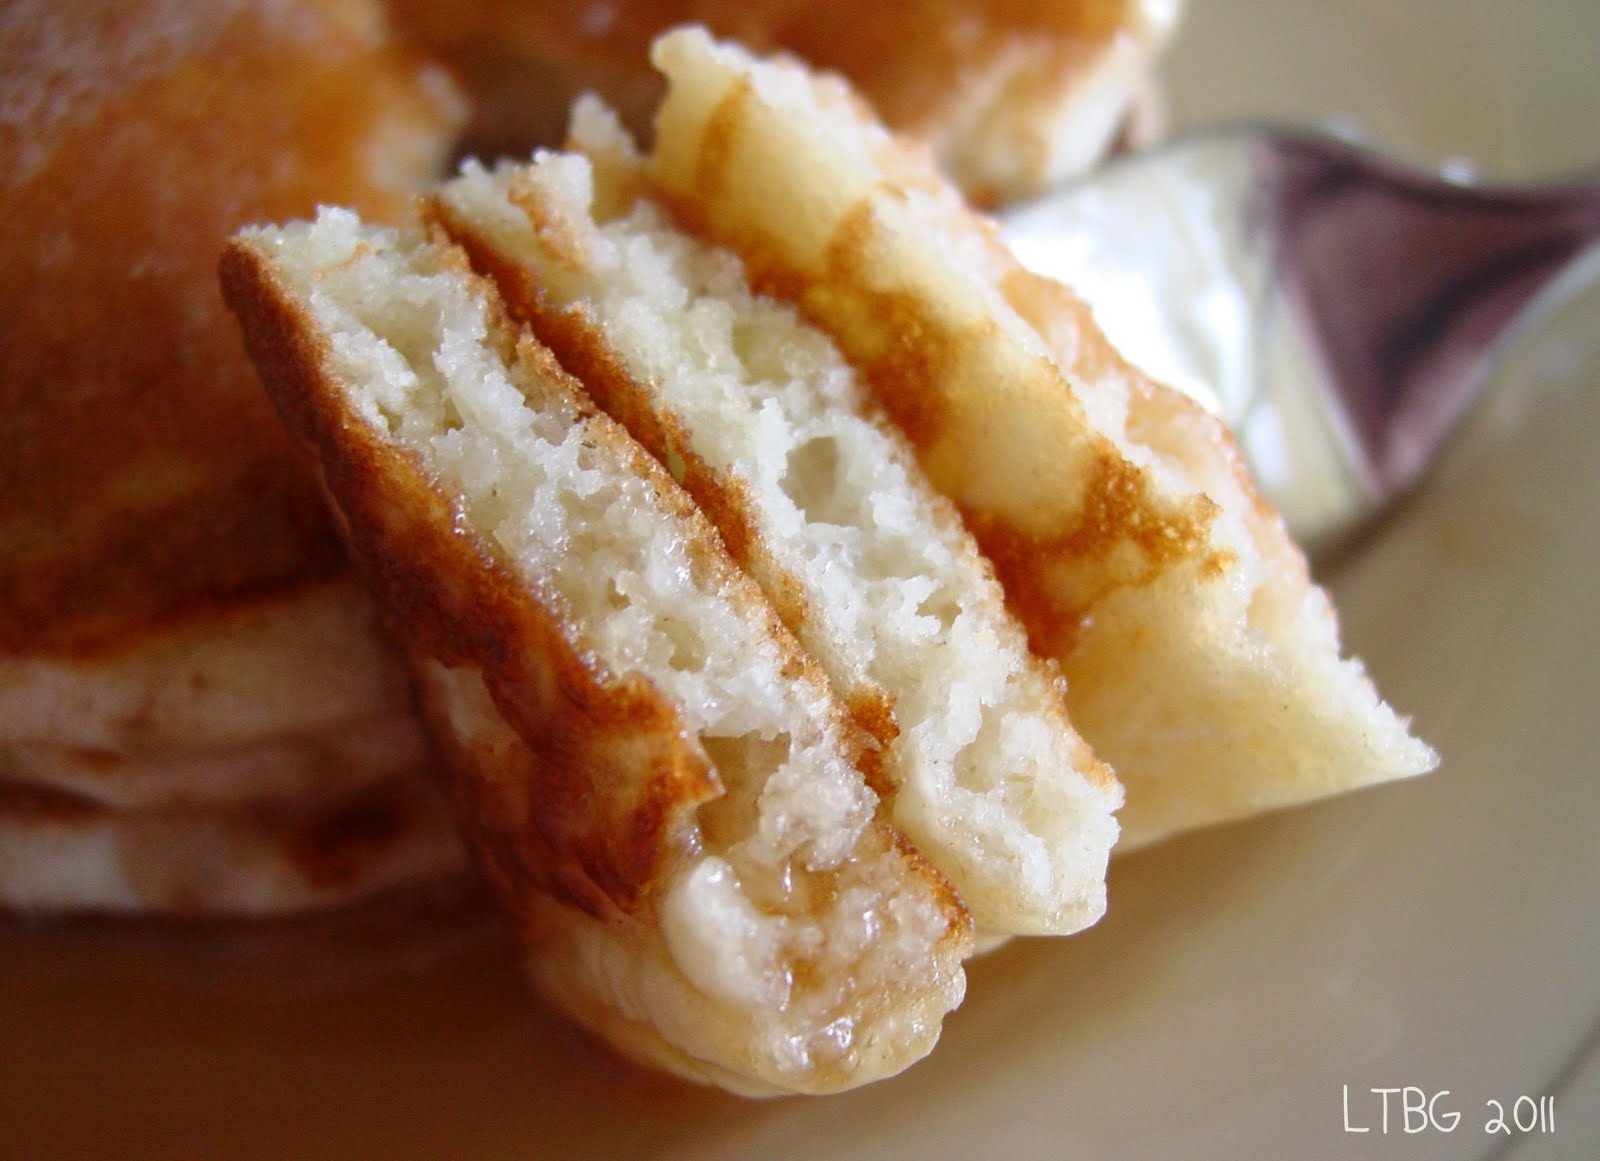 Perfecting Lick homemade make pancakes to Bowl bananas Good: The with how Pancake  The